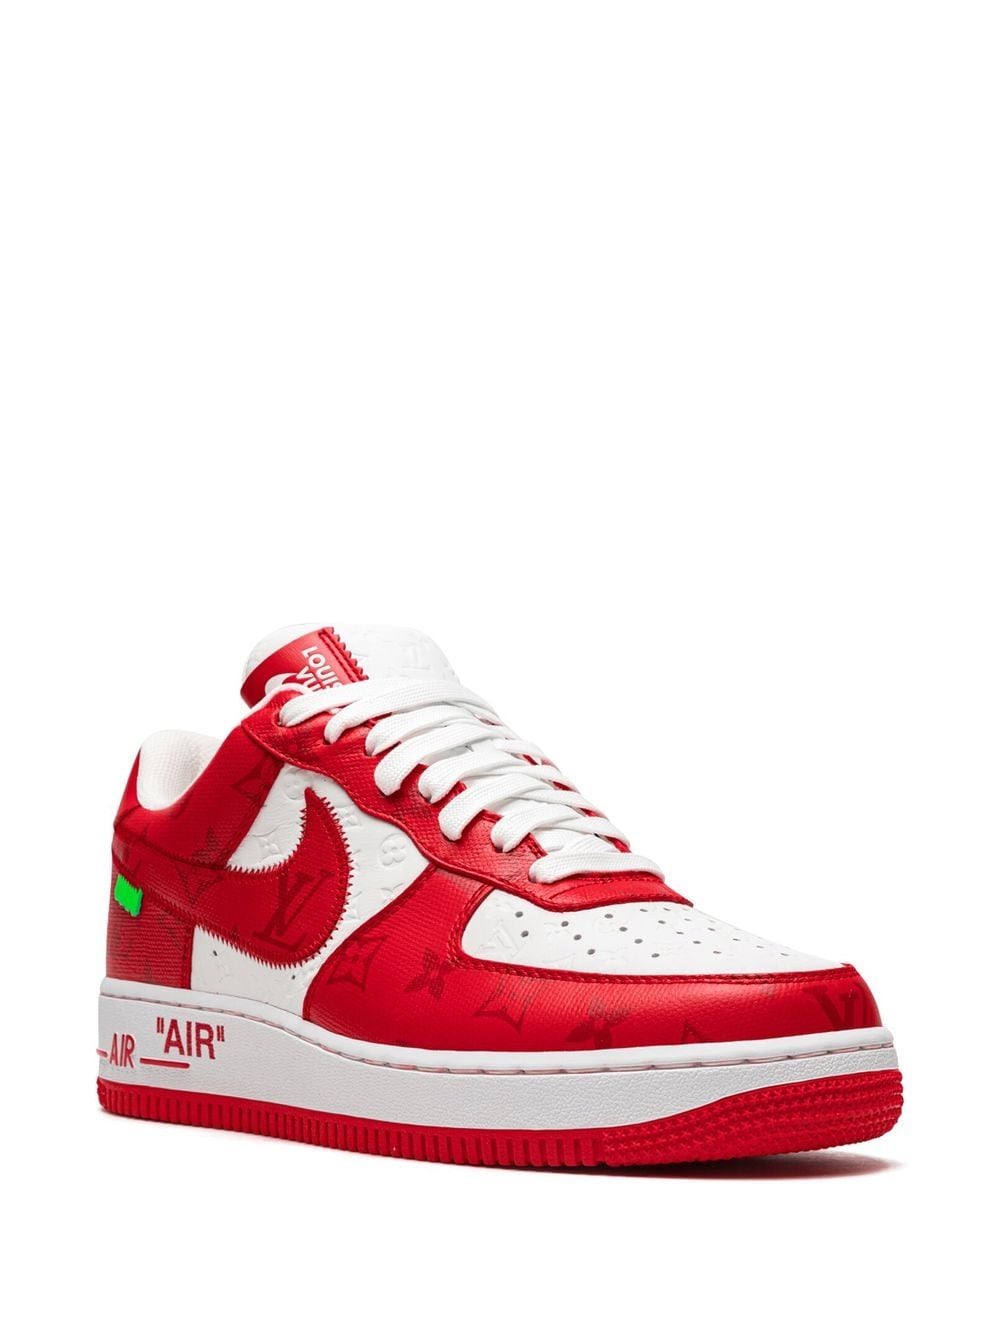 Nike x Louis Vuitton Air Force 1 Low Virgil Abloh White Red - Men's Sneakers - 9.5